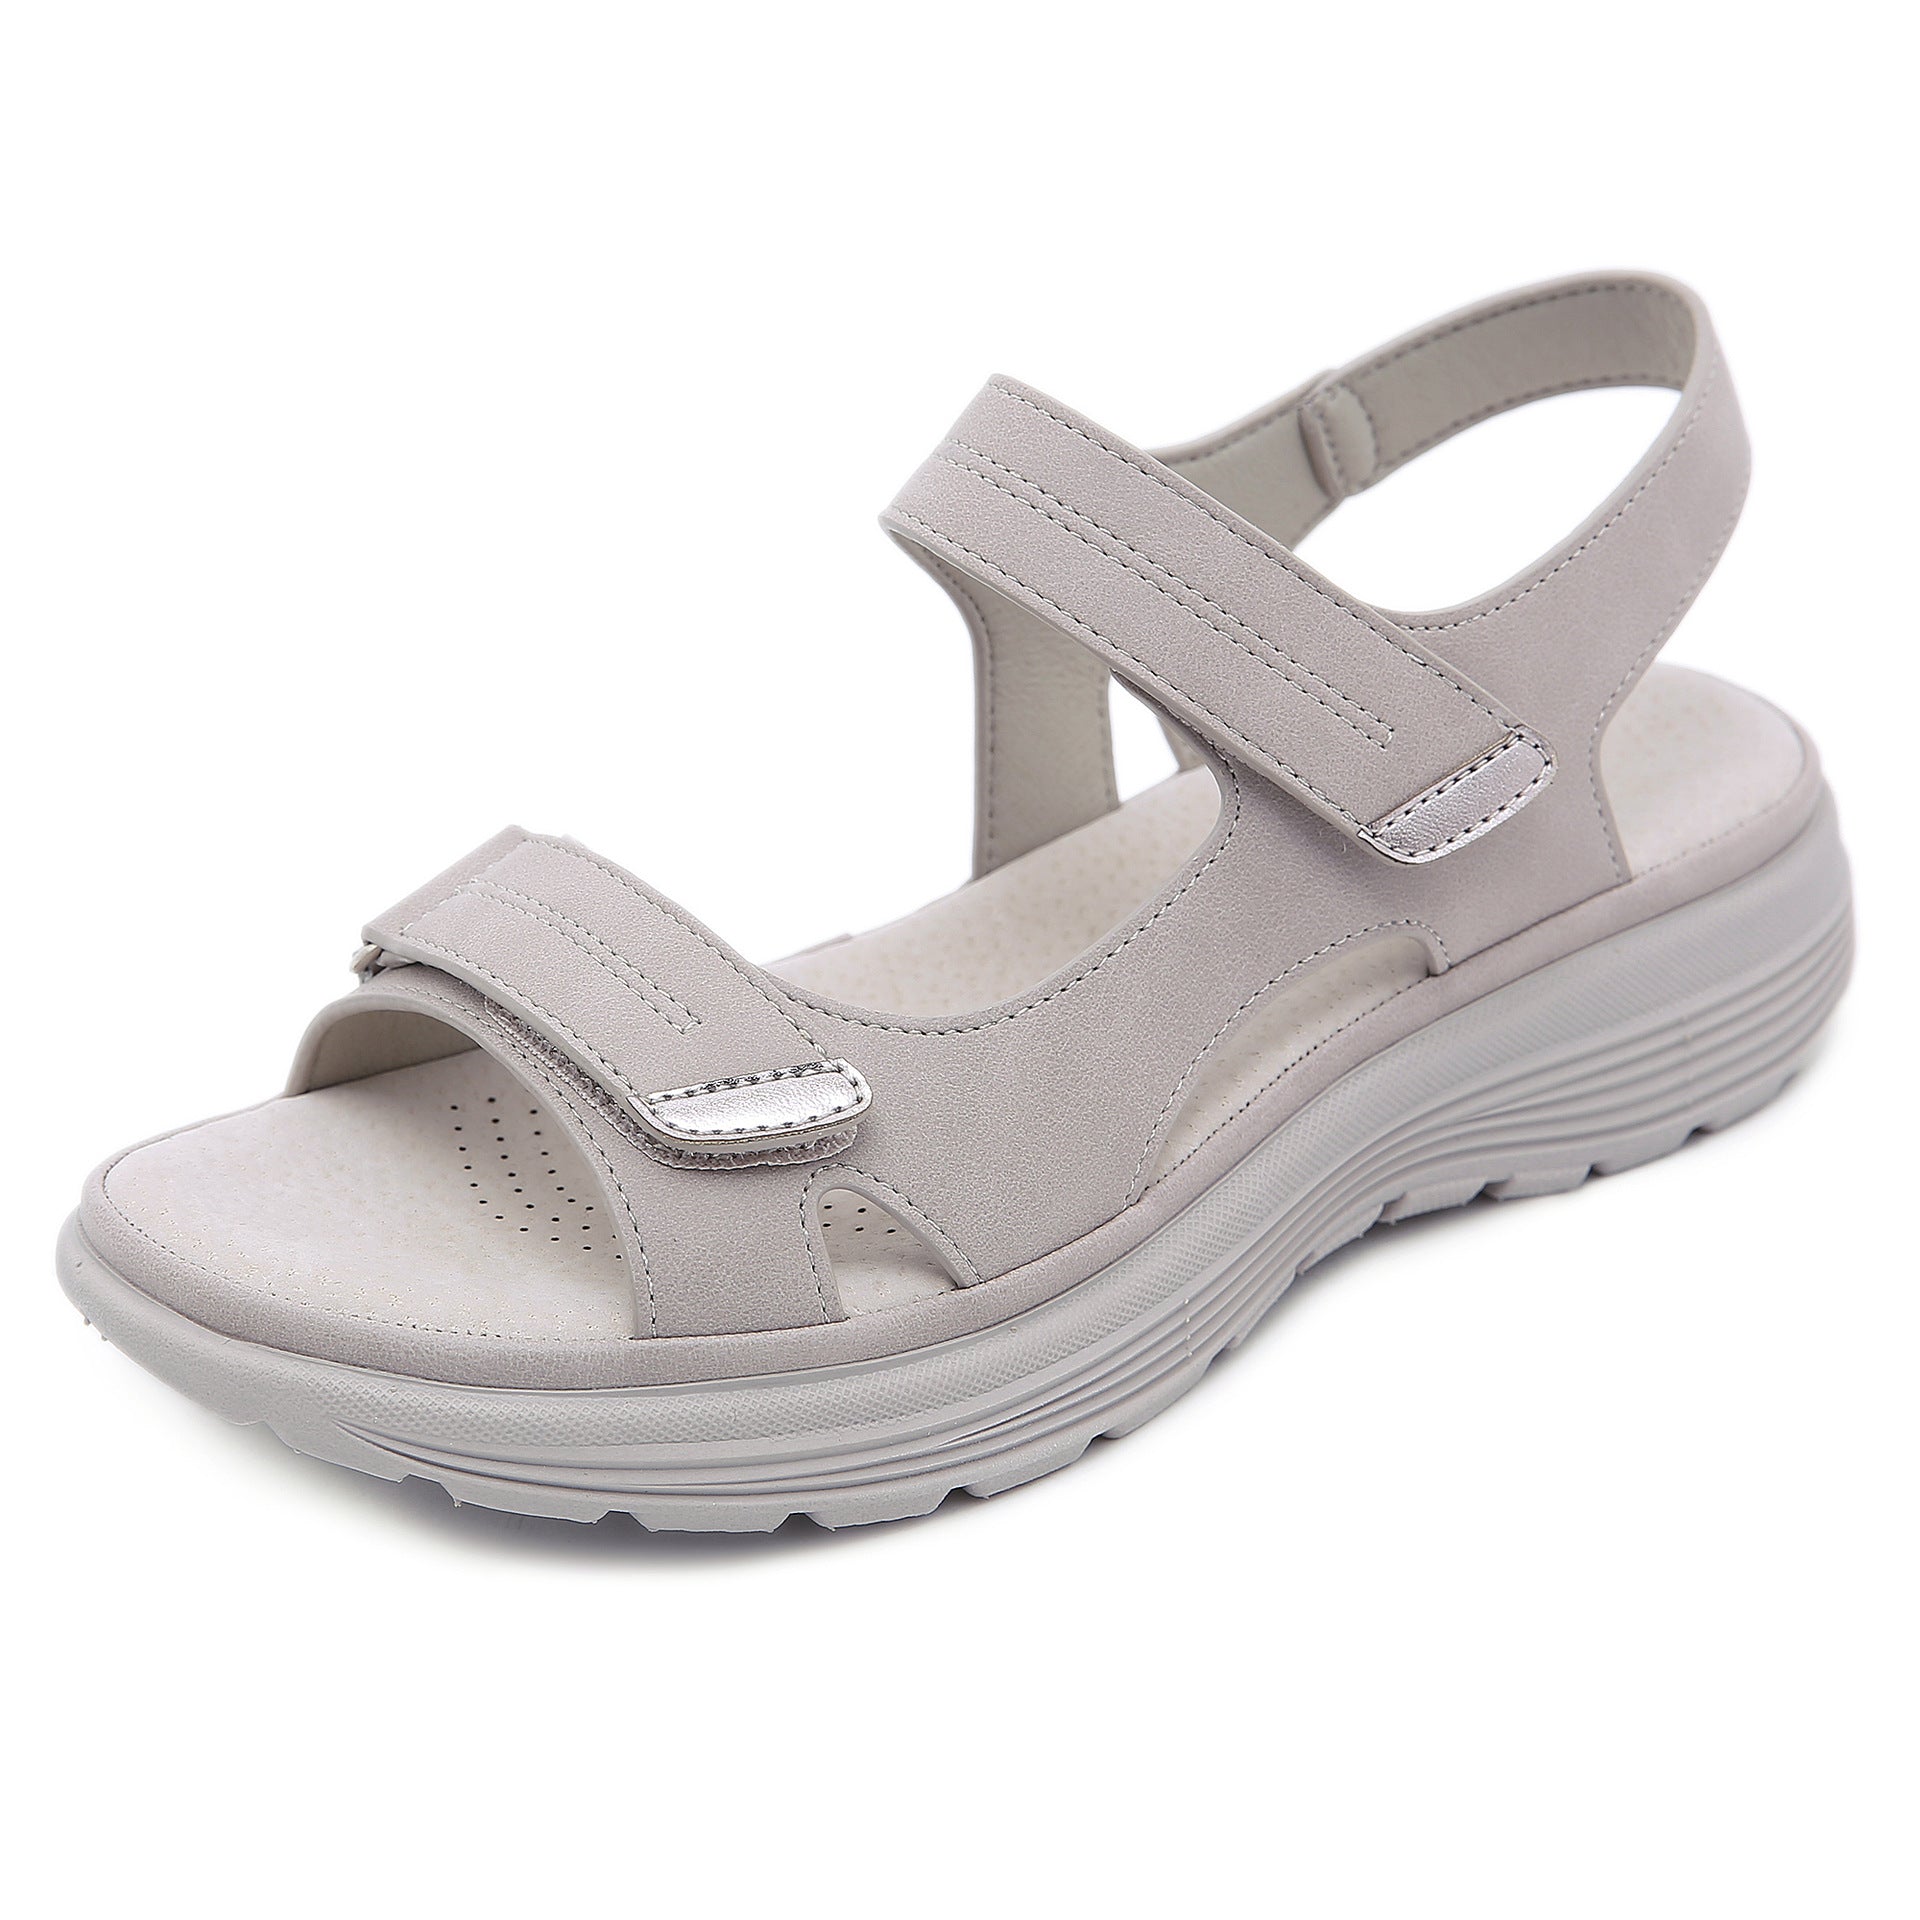 Slip-on Wedge Sandals